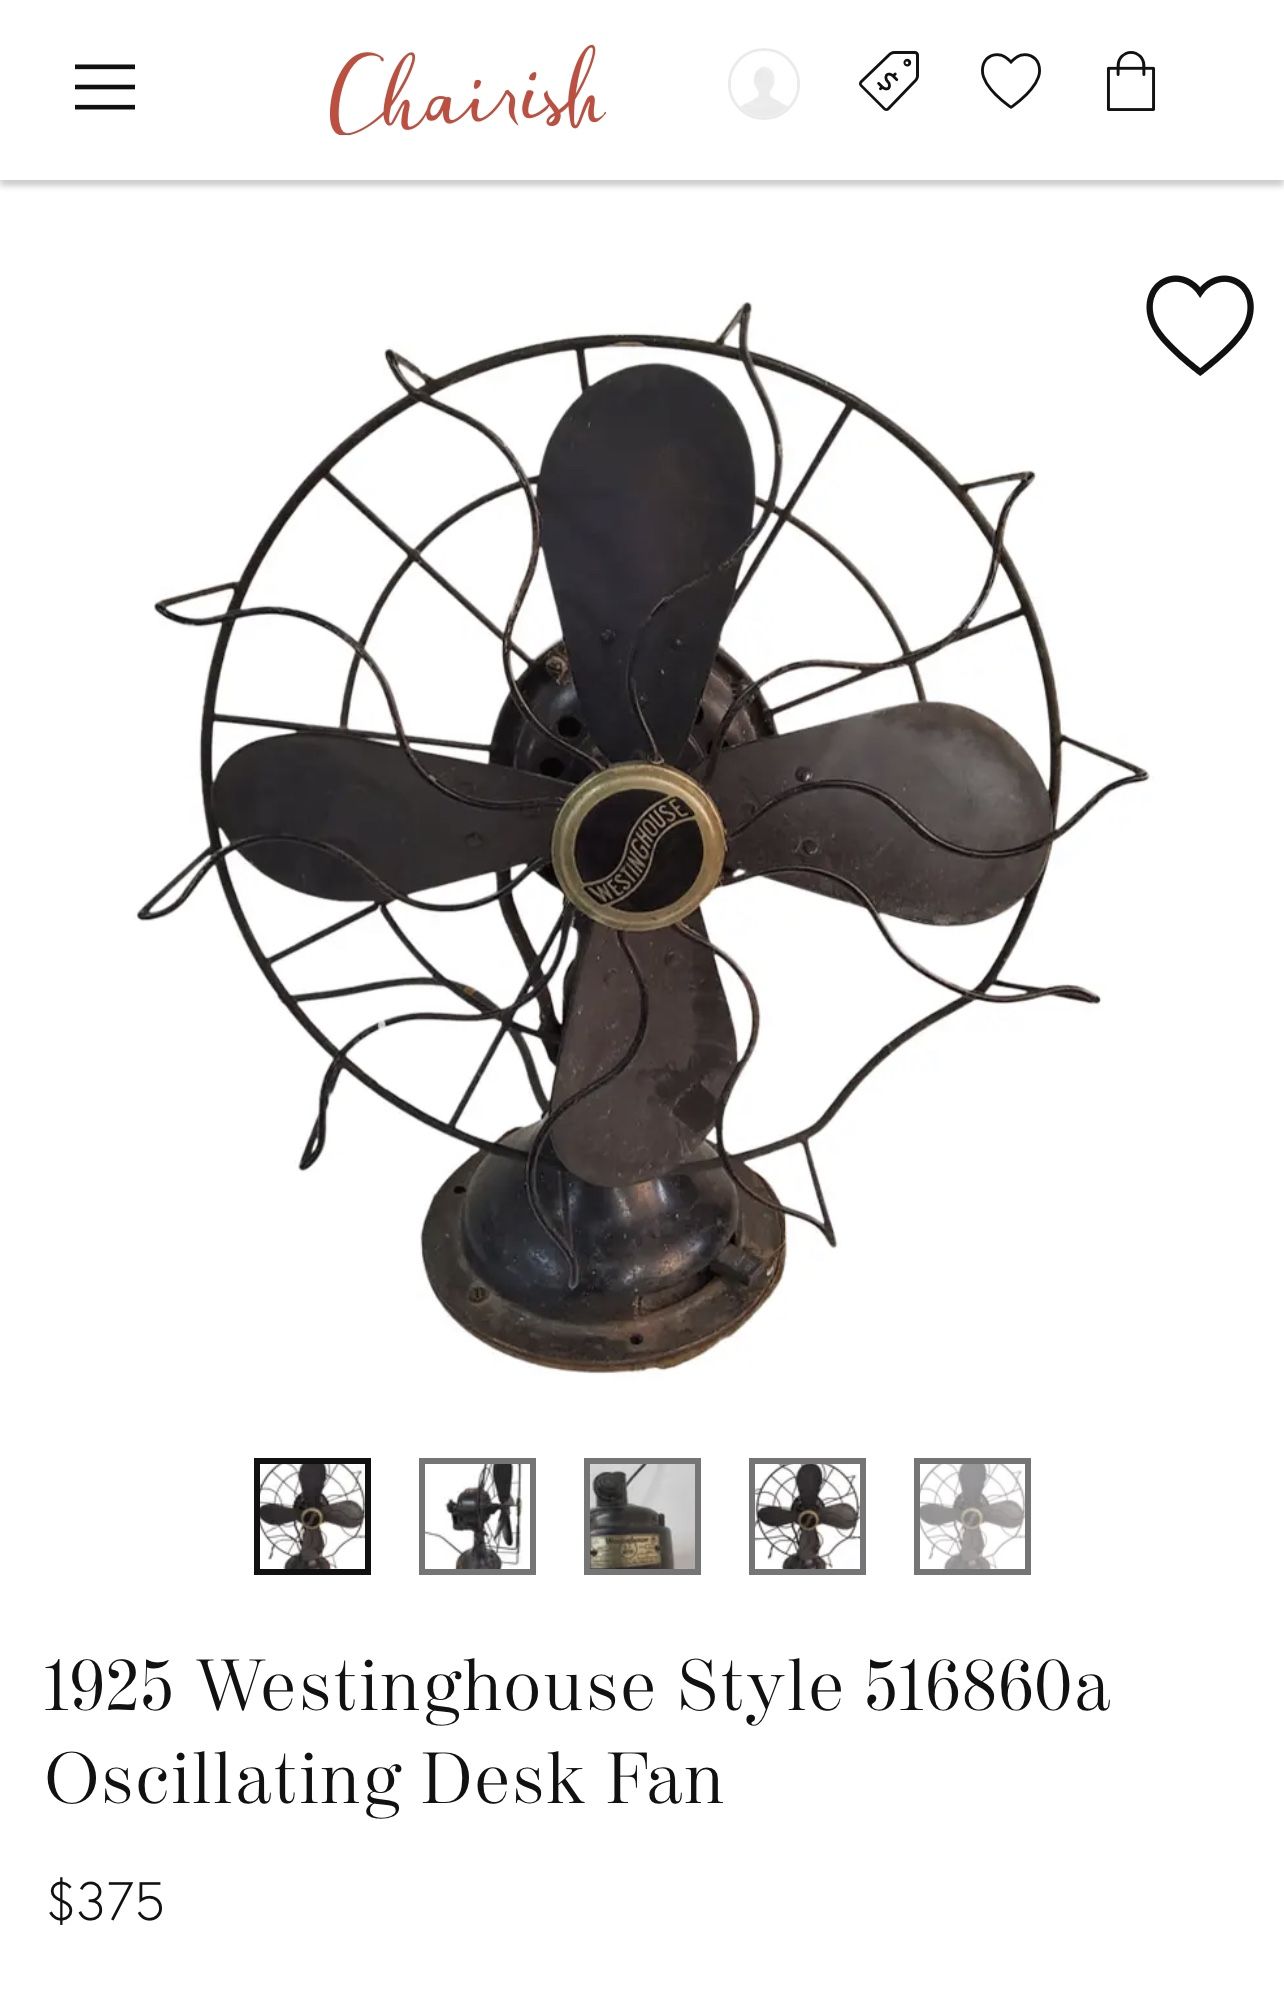 Circa 1925 12" Westinghouse Oscillating Desk Fan. 